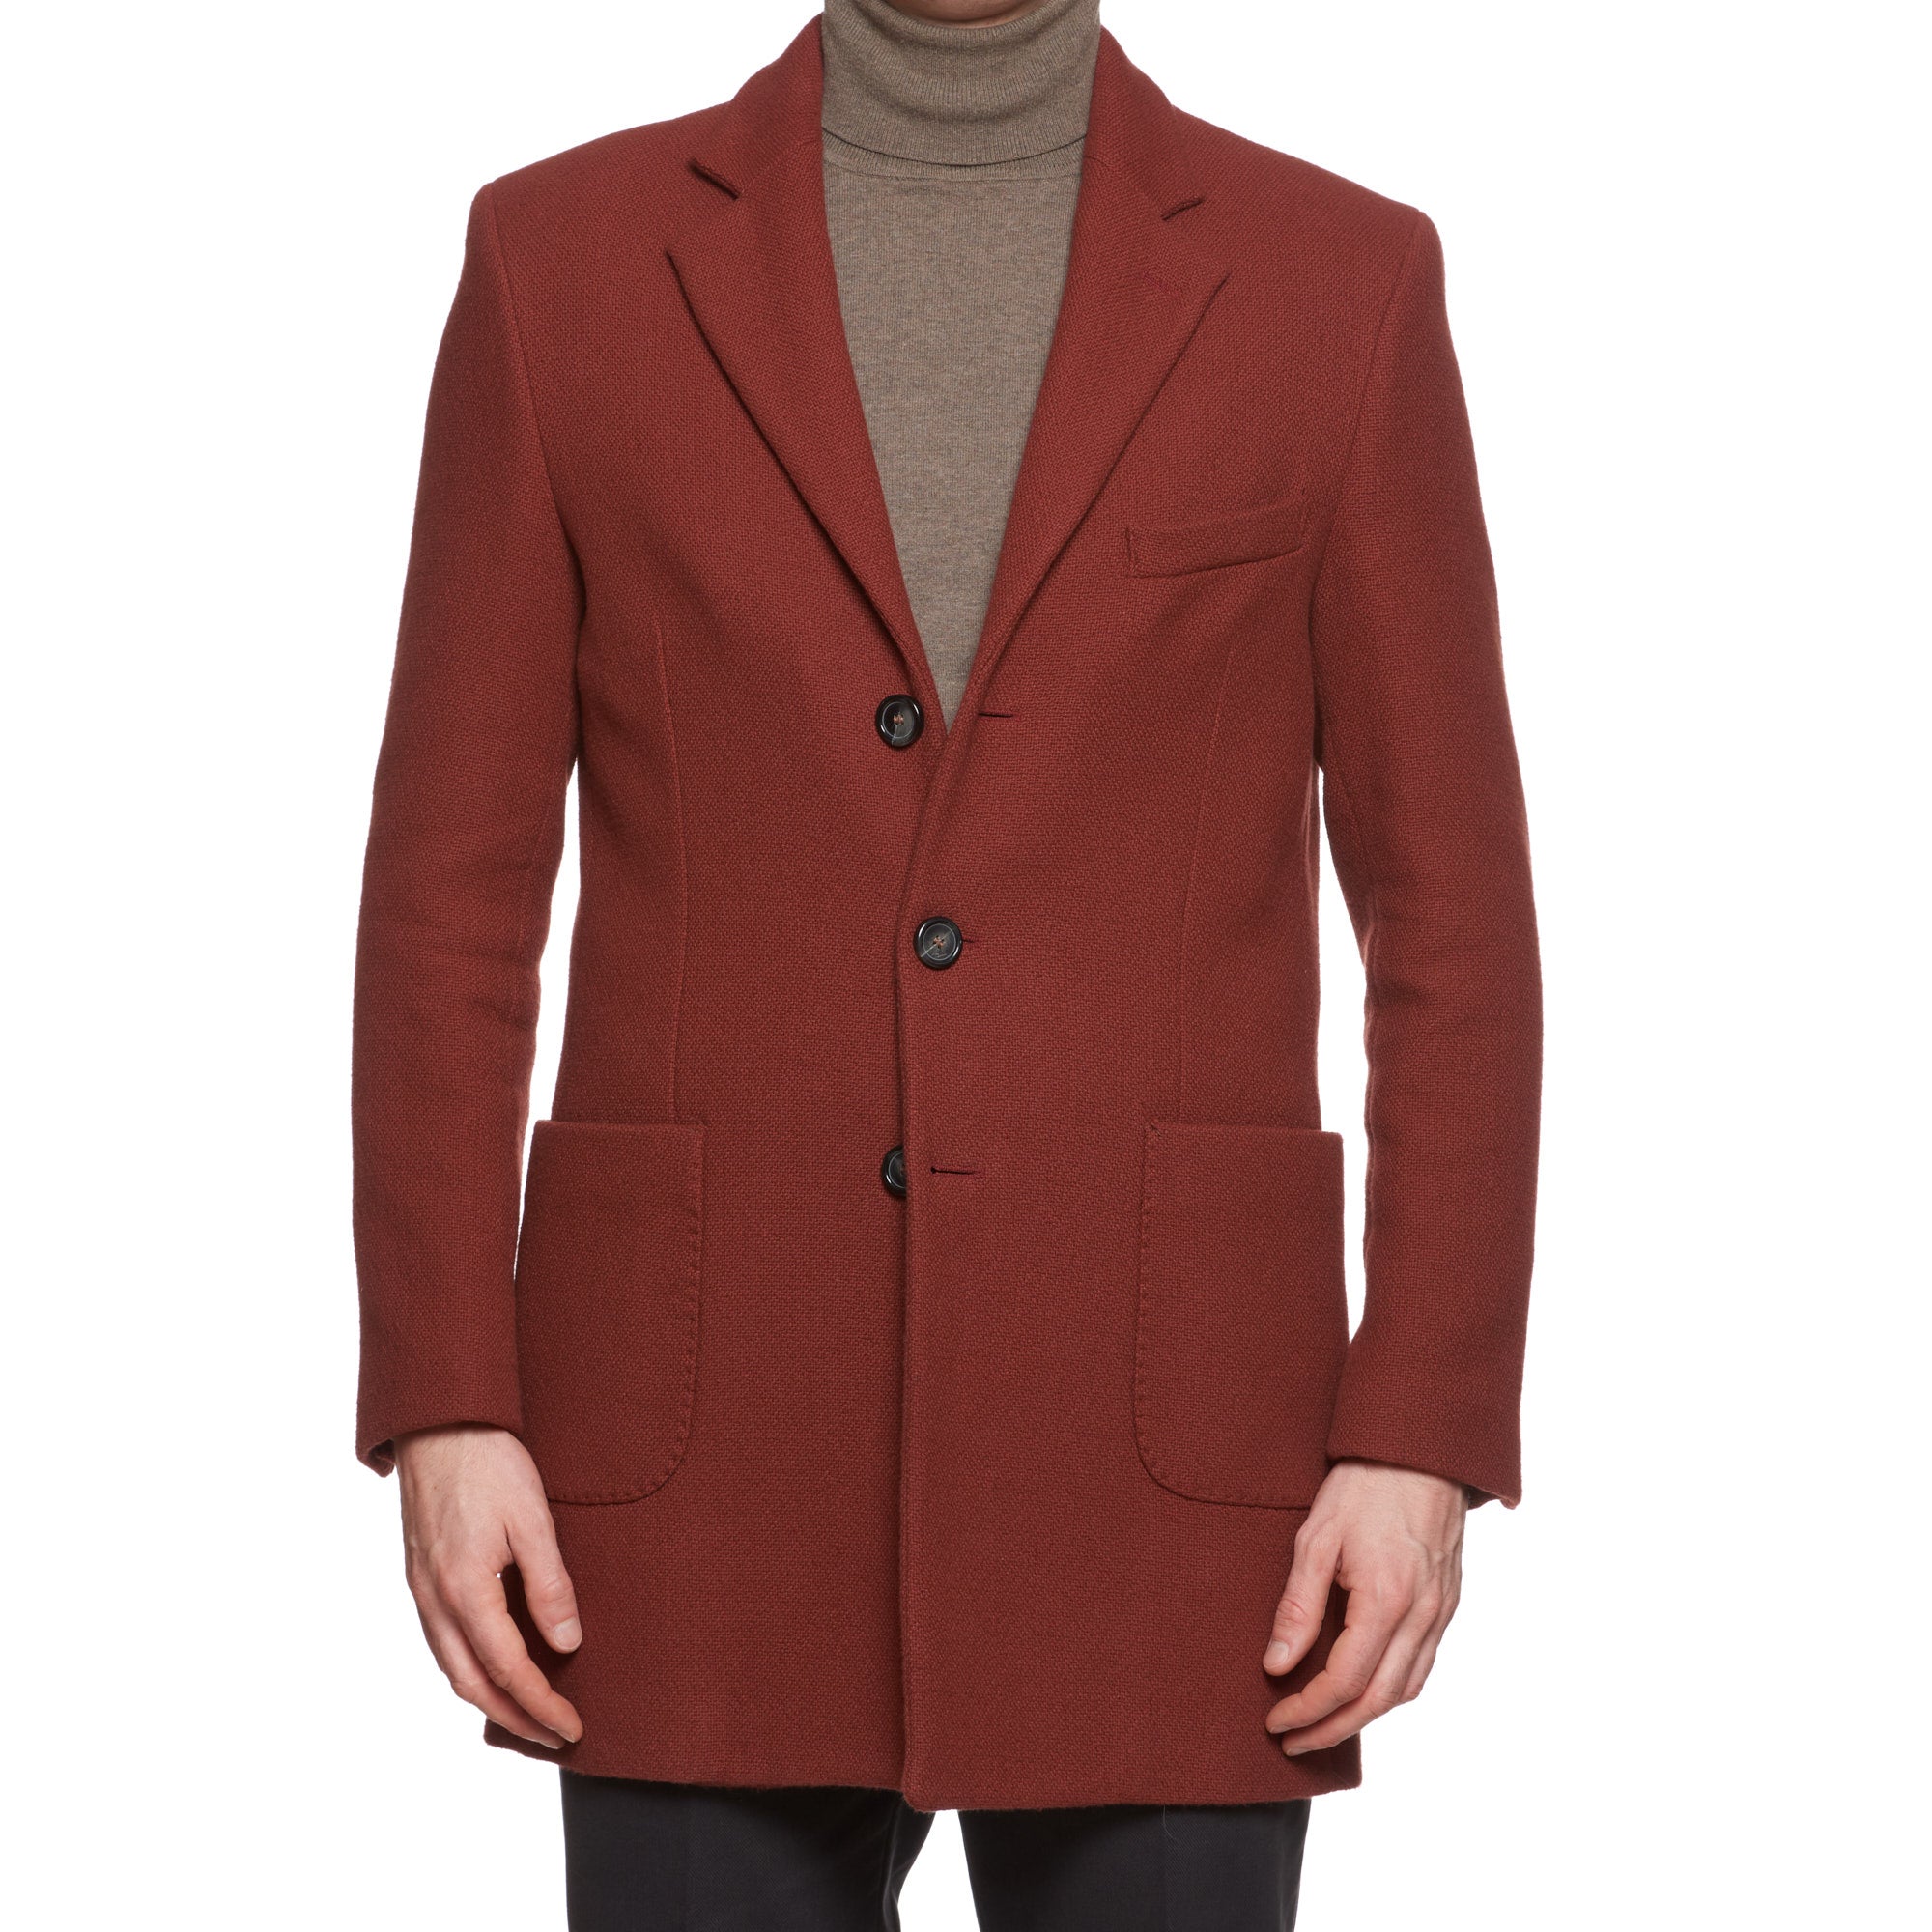 DAVID BROWN Brick Red Wool Hopsack Jacket Coat NEW Size M US 40 Slim Fit DAVID BROWN